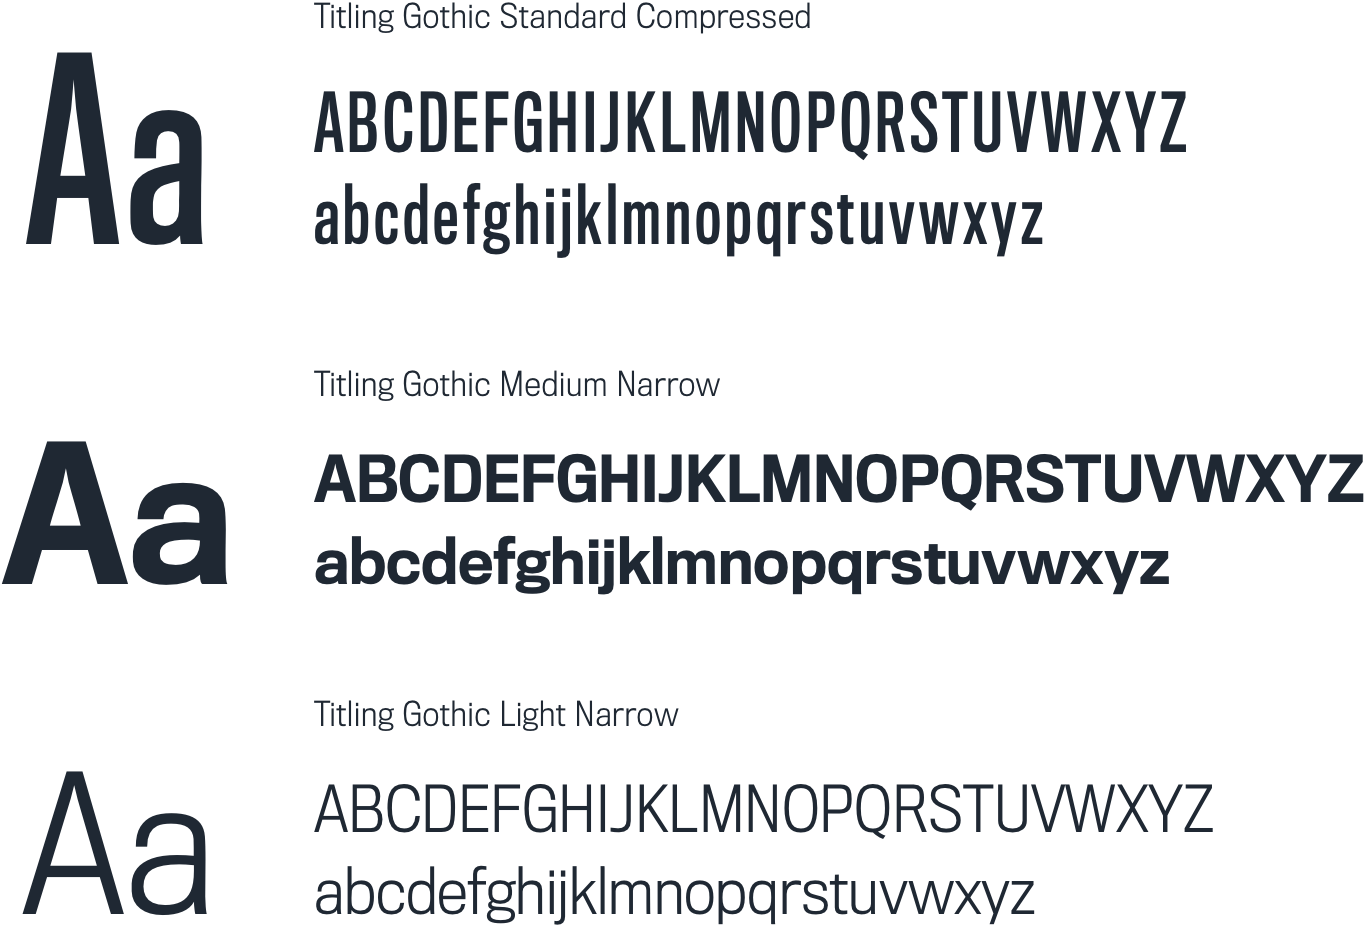 mopar-typography